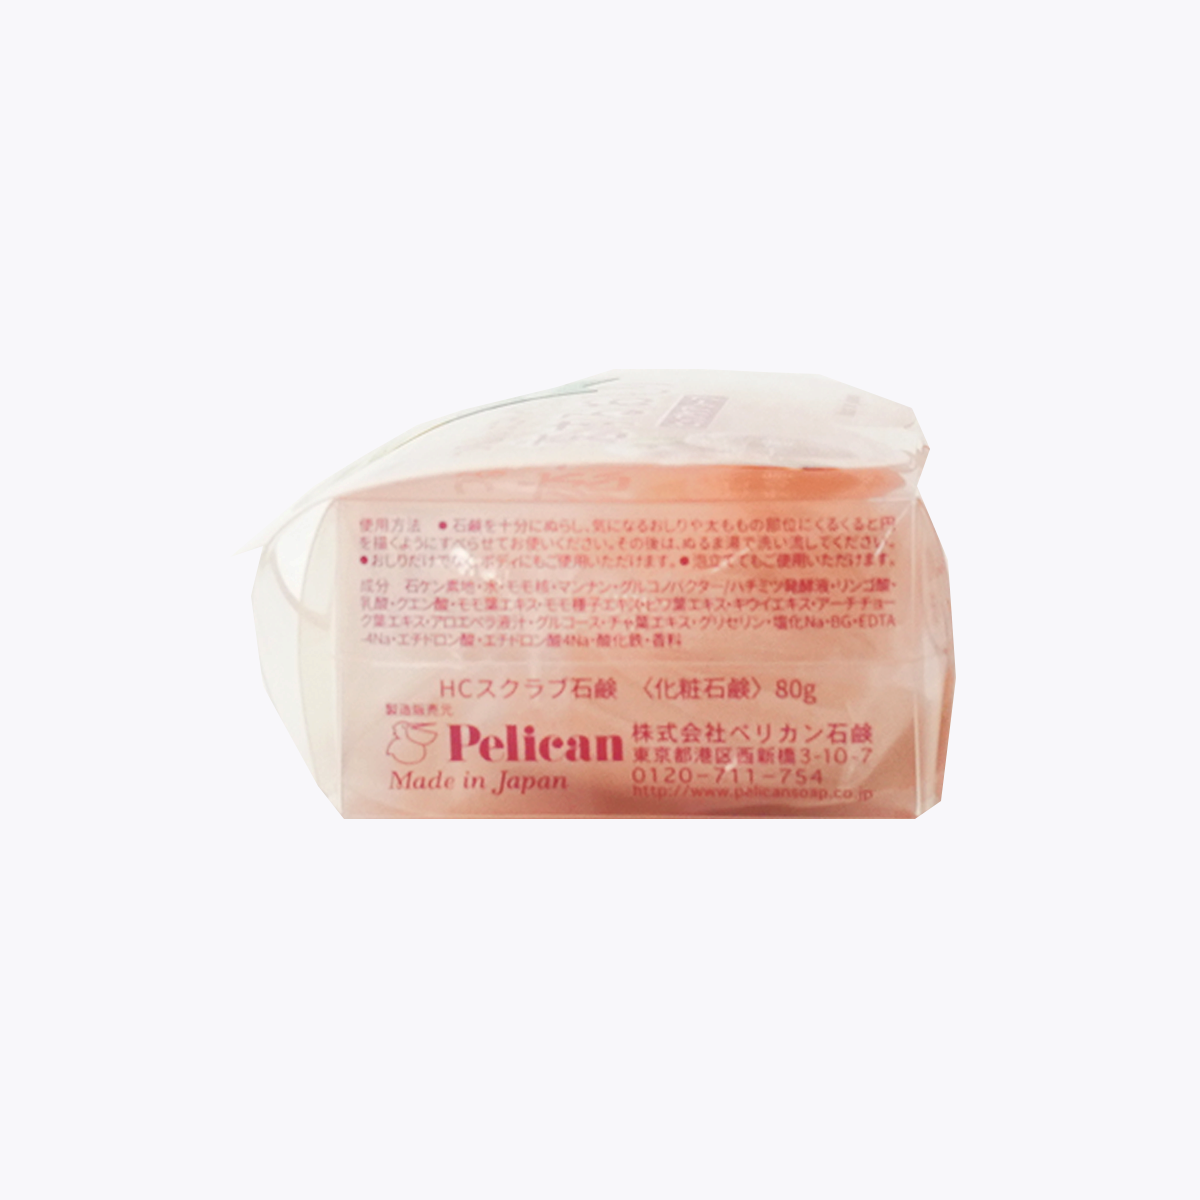 Pelican 沛麗康 蜜桃臀 去角質 保濕 美臀香皂 80g